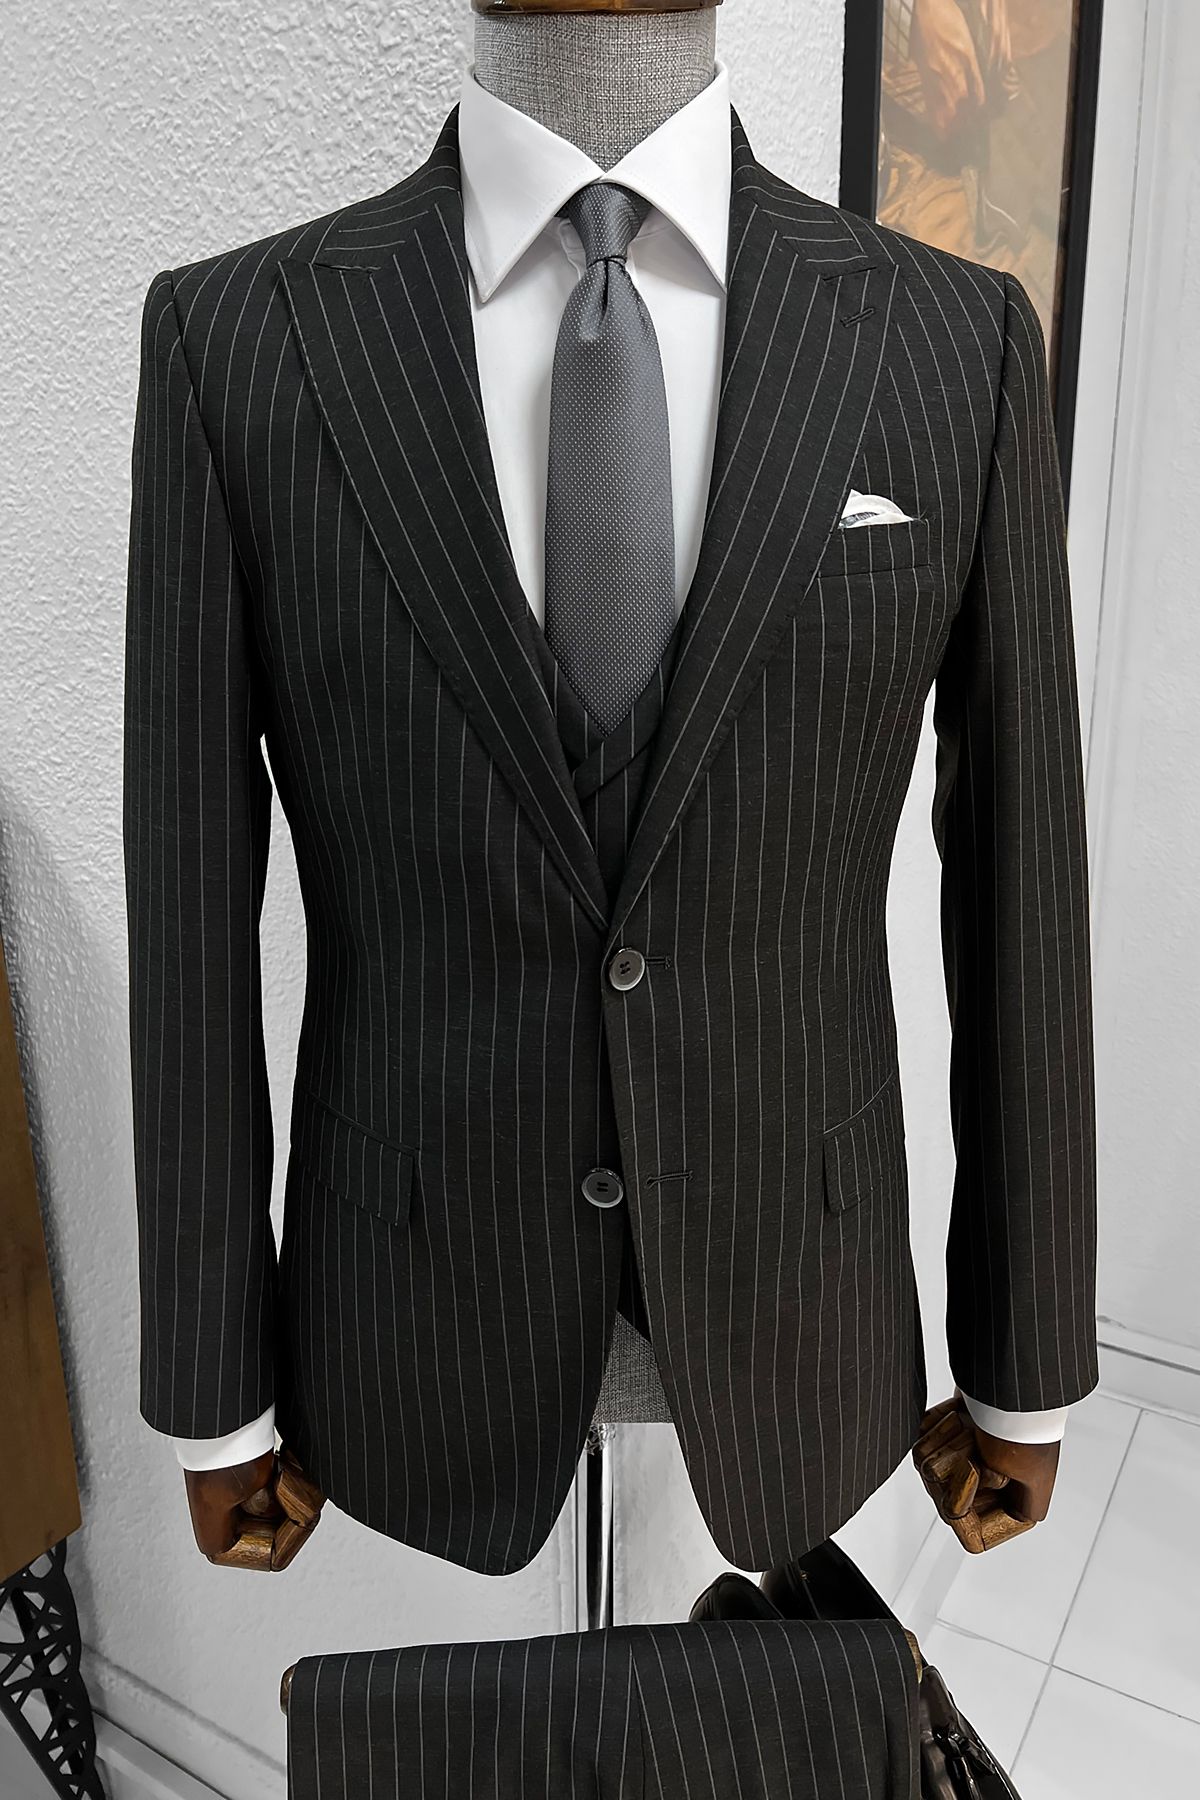 Campbell Black Striped Slim Fit Suit